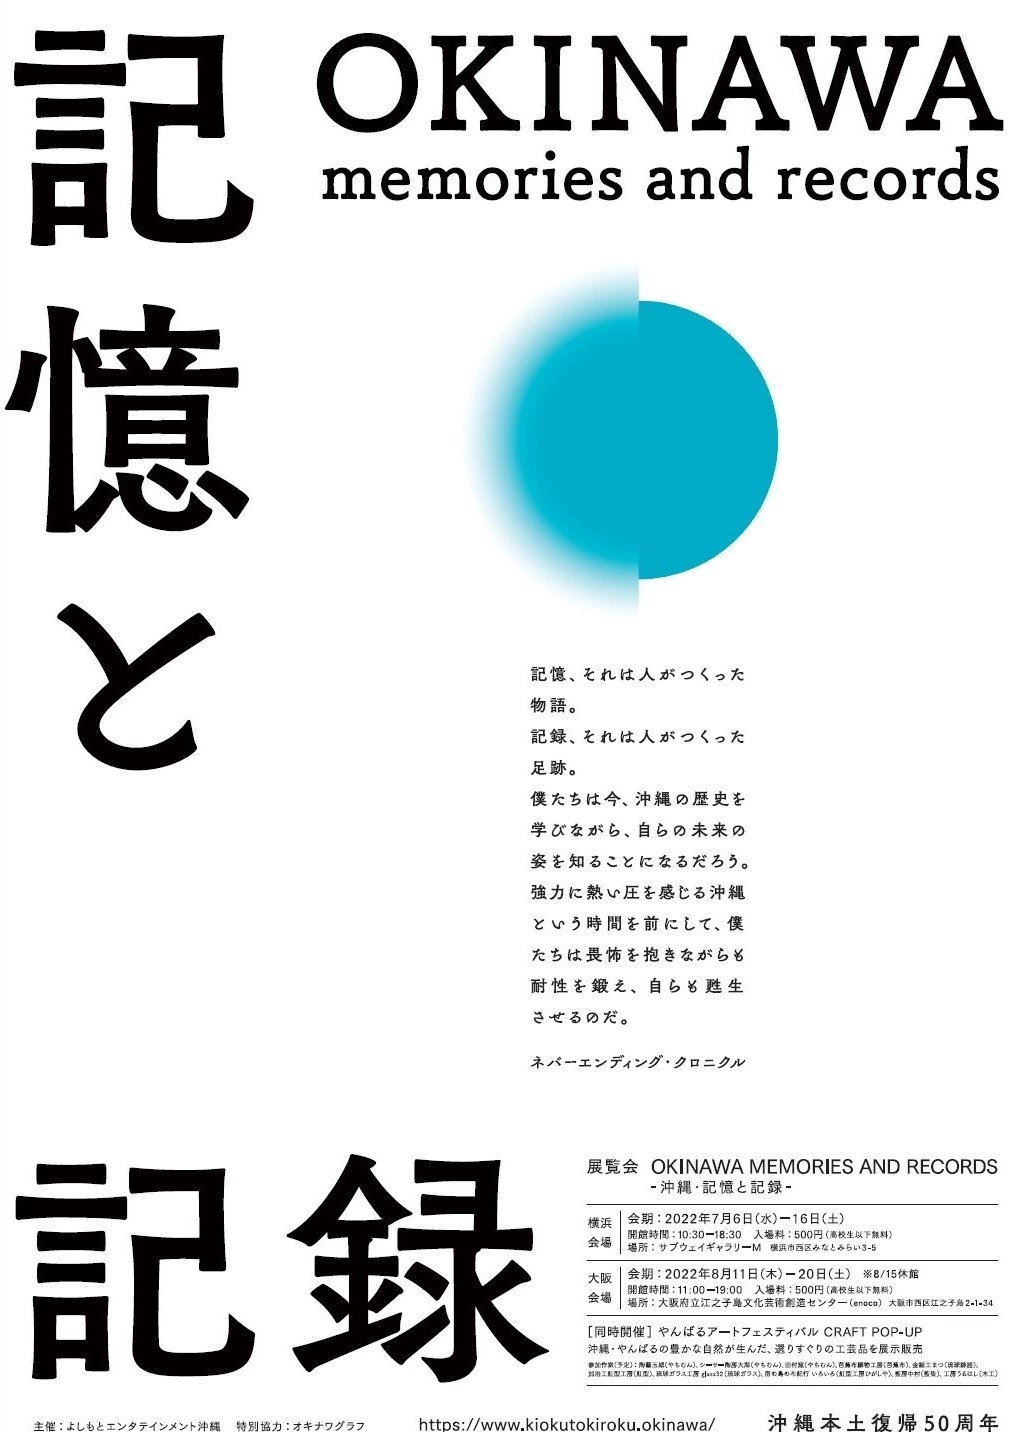 本土復帰50周年展示企画『OKINAWA MEMORIES AND RECORDS 沖縄・記憶と記録』